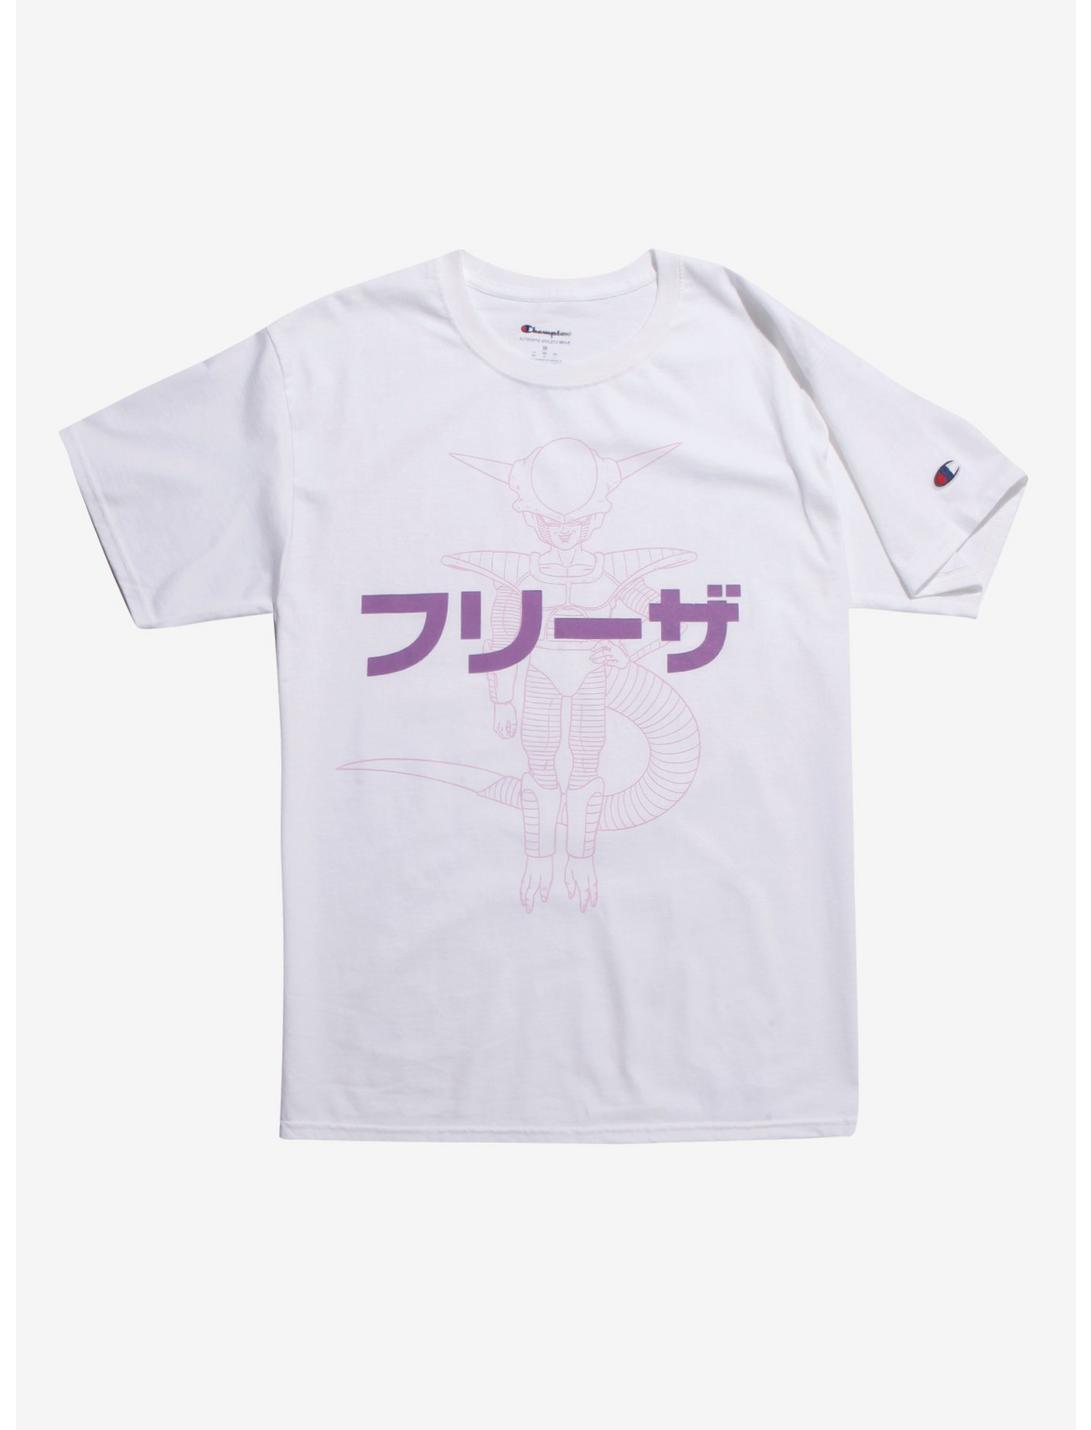 Dragon Ball Z Frieza Champion T-Shirt Hot Topic Exclusive, WHITE, hi-res